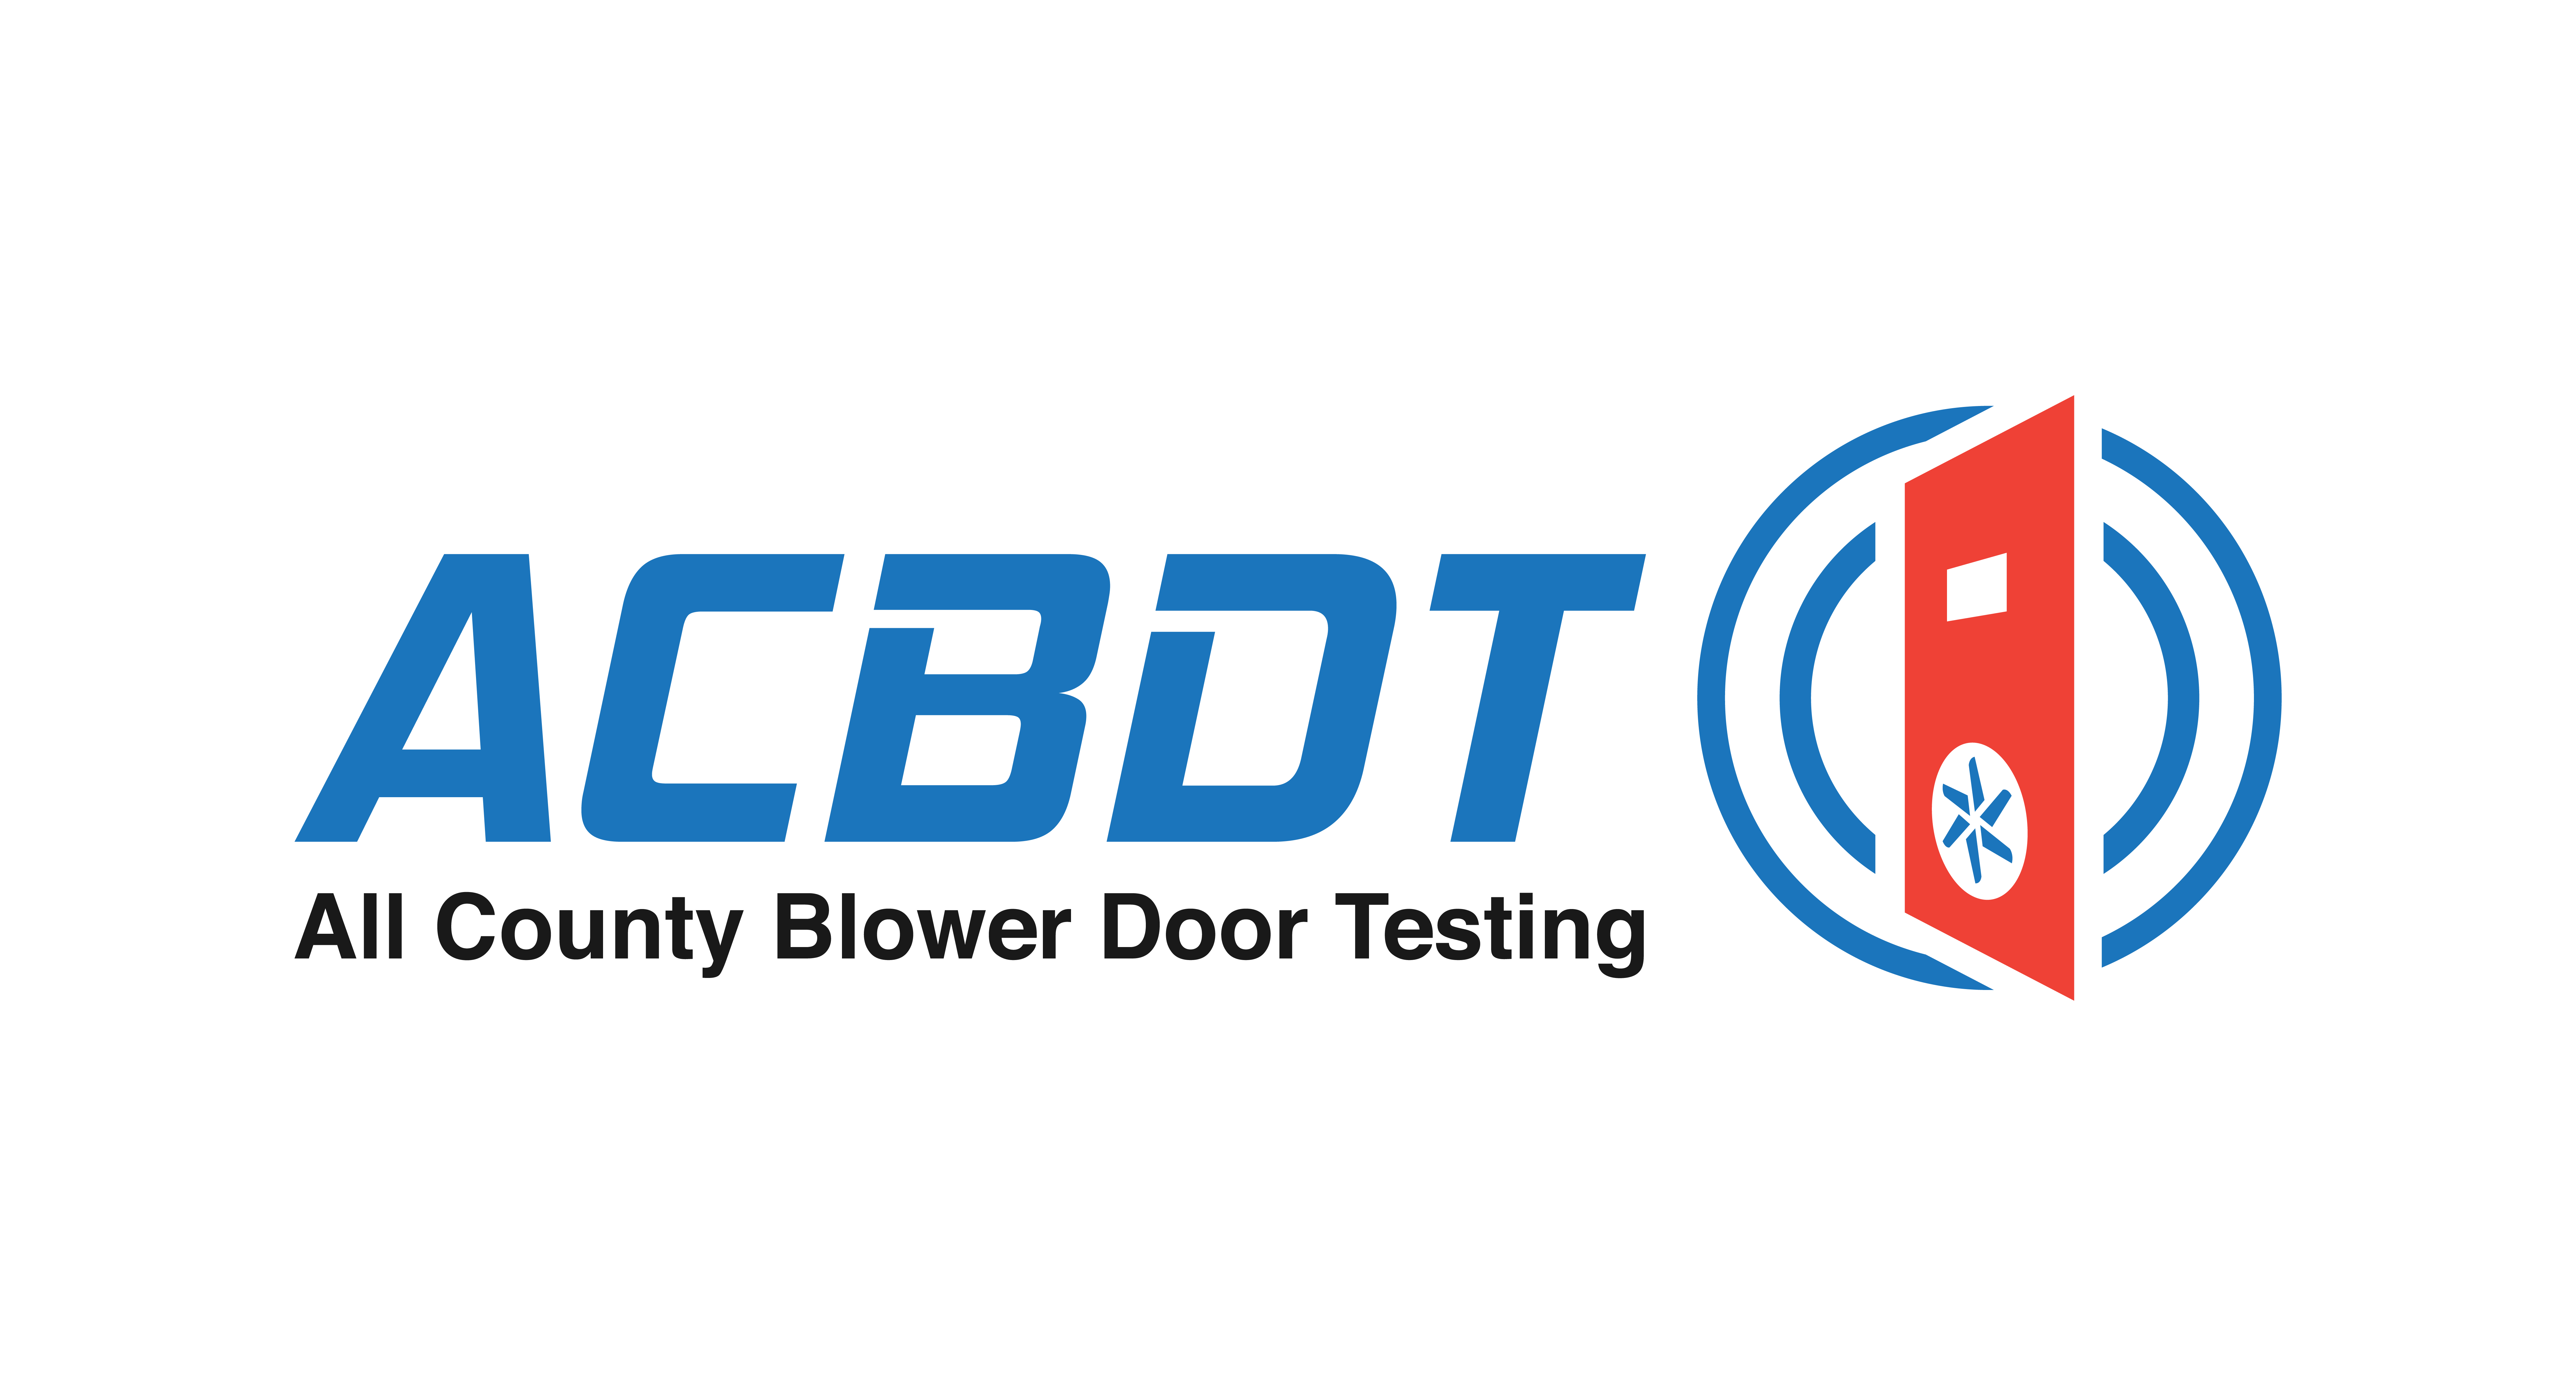 All County Blower door testing